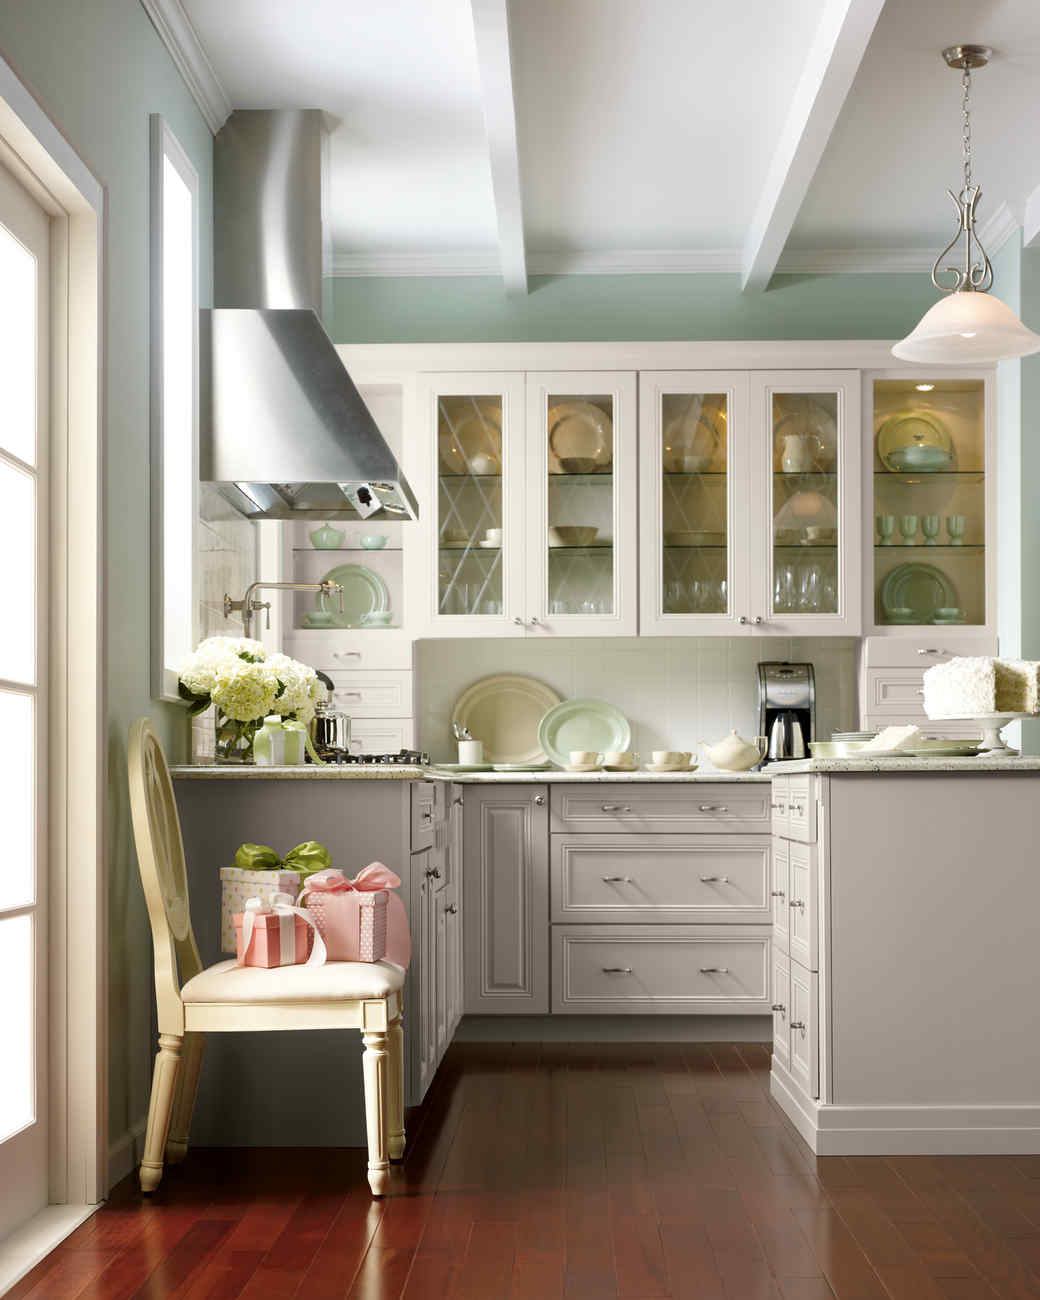  Martha  Stewart  Living  Kitchen  Designs from The Home Depot 